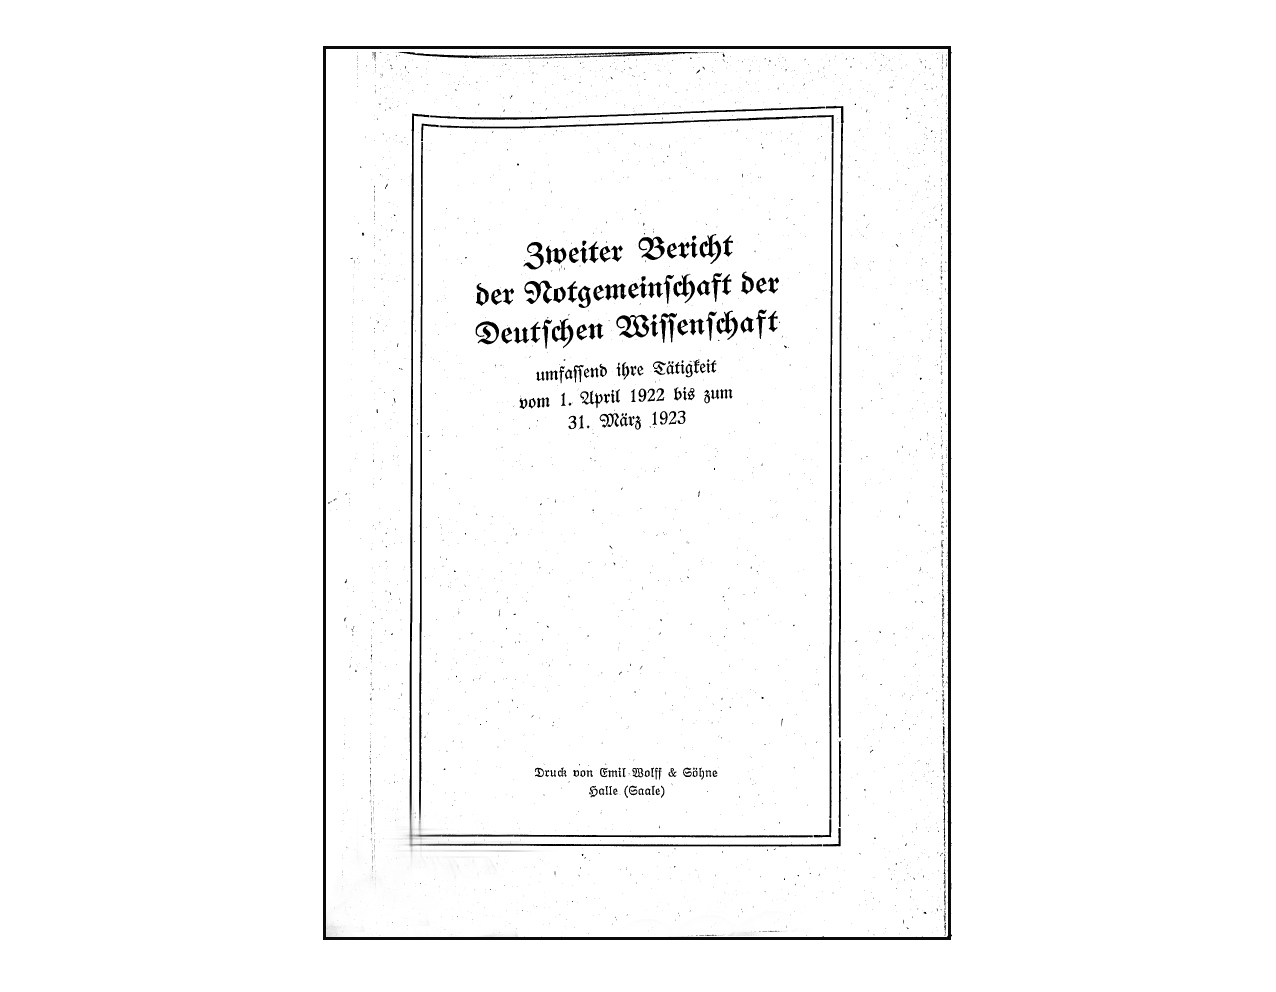 Second Report of the Notgemeinschaft, 1923